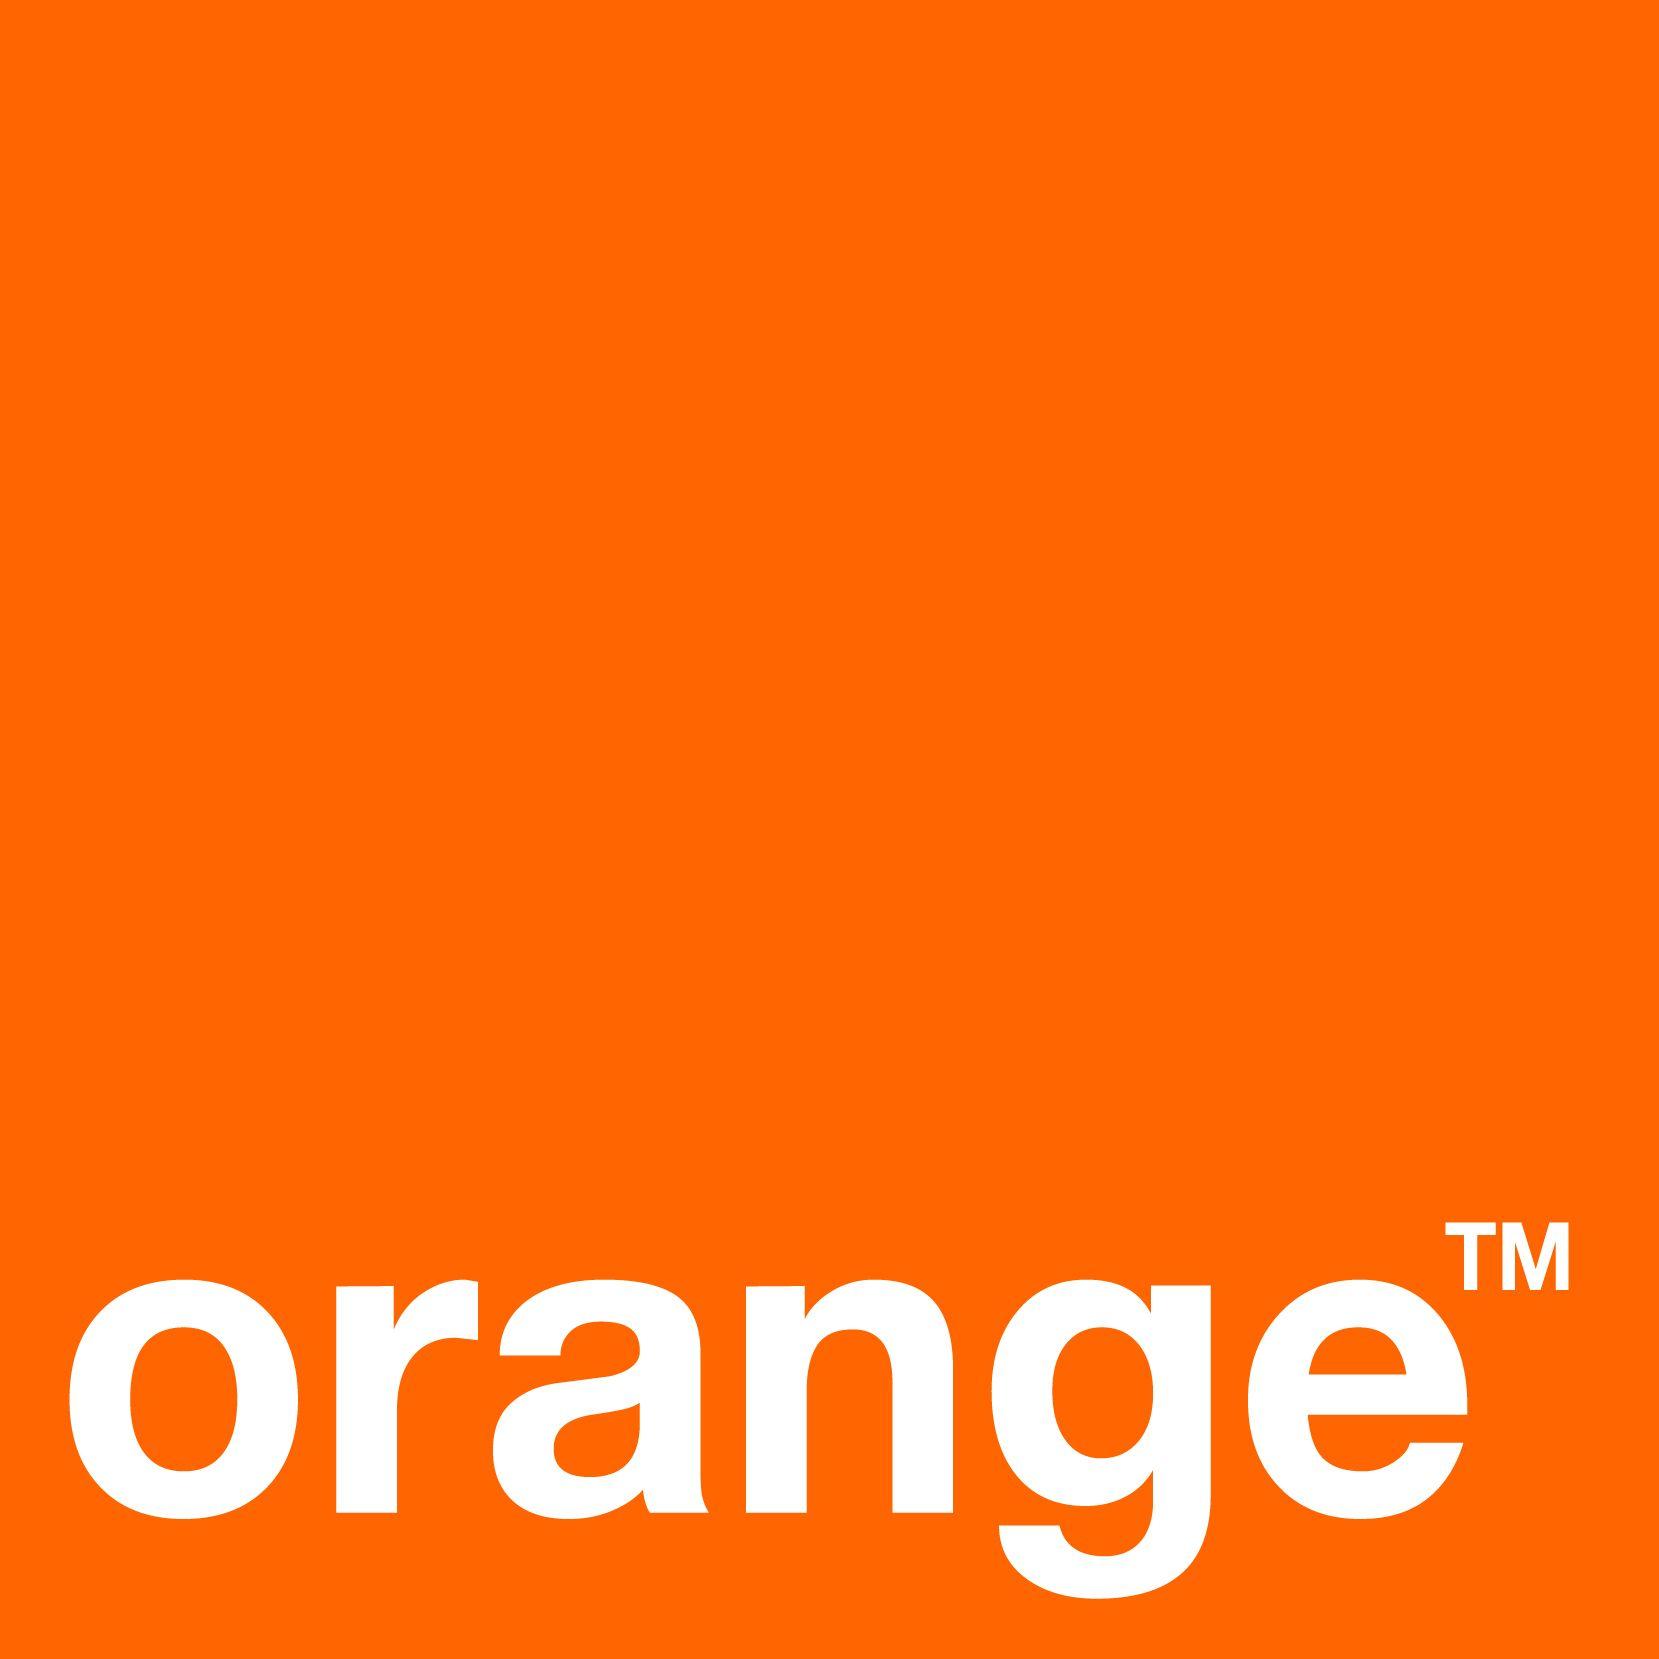 TV Orange Logo - Image - Orange-logo.jpg | Prepaid Data SIM Card Wiki | FANDOM ...